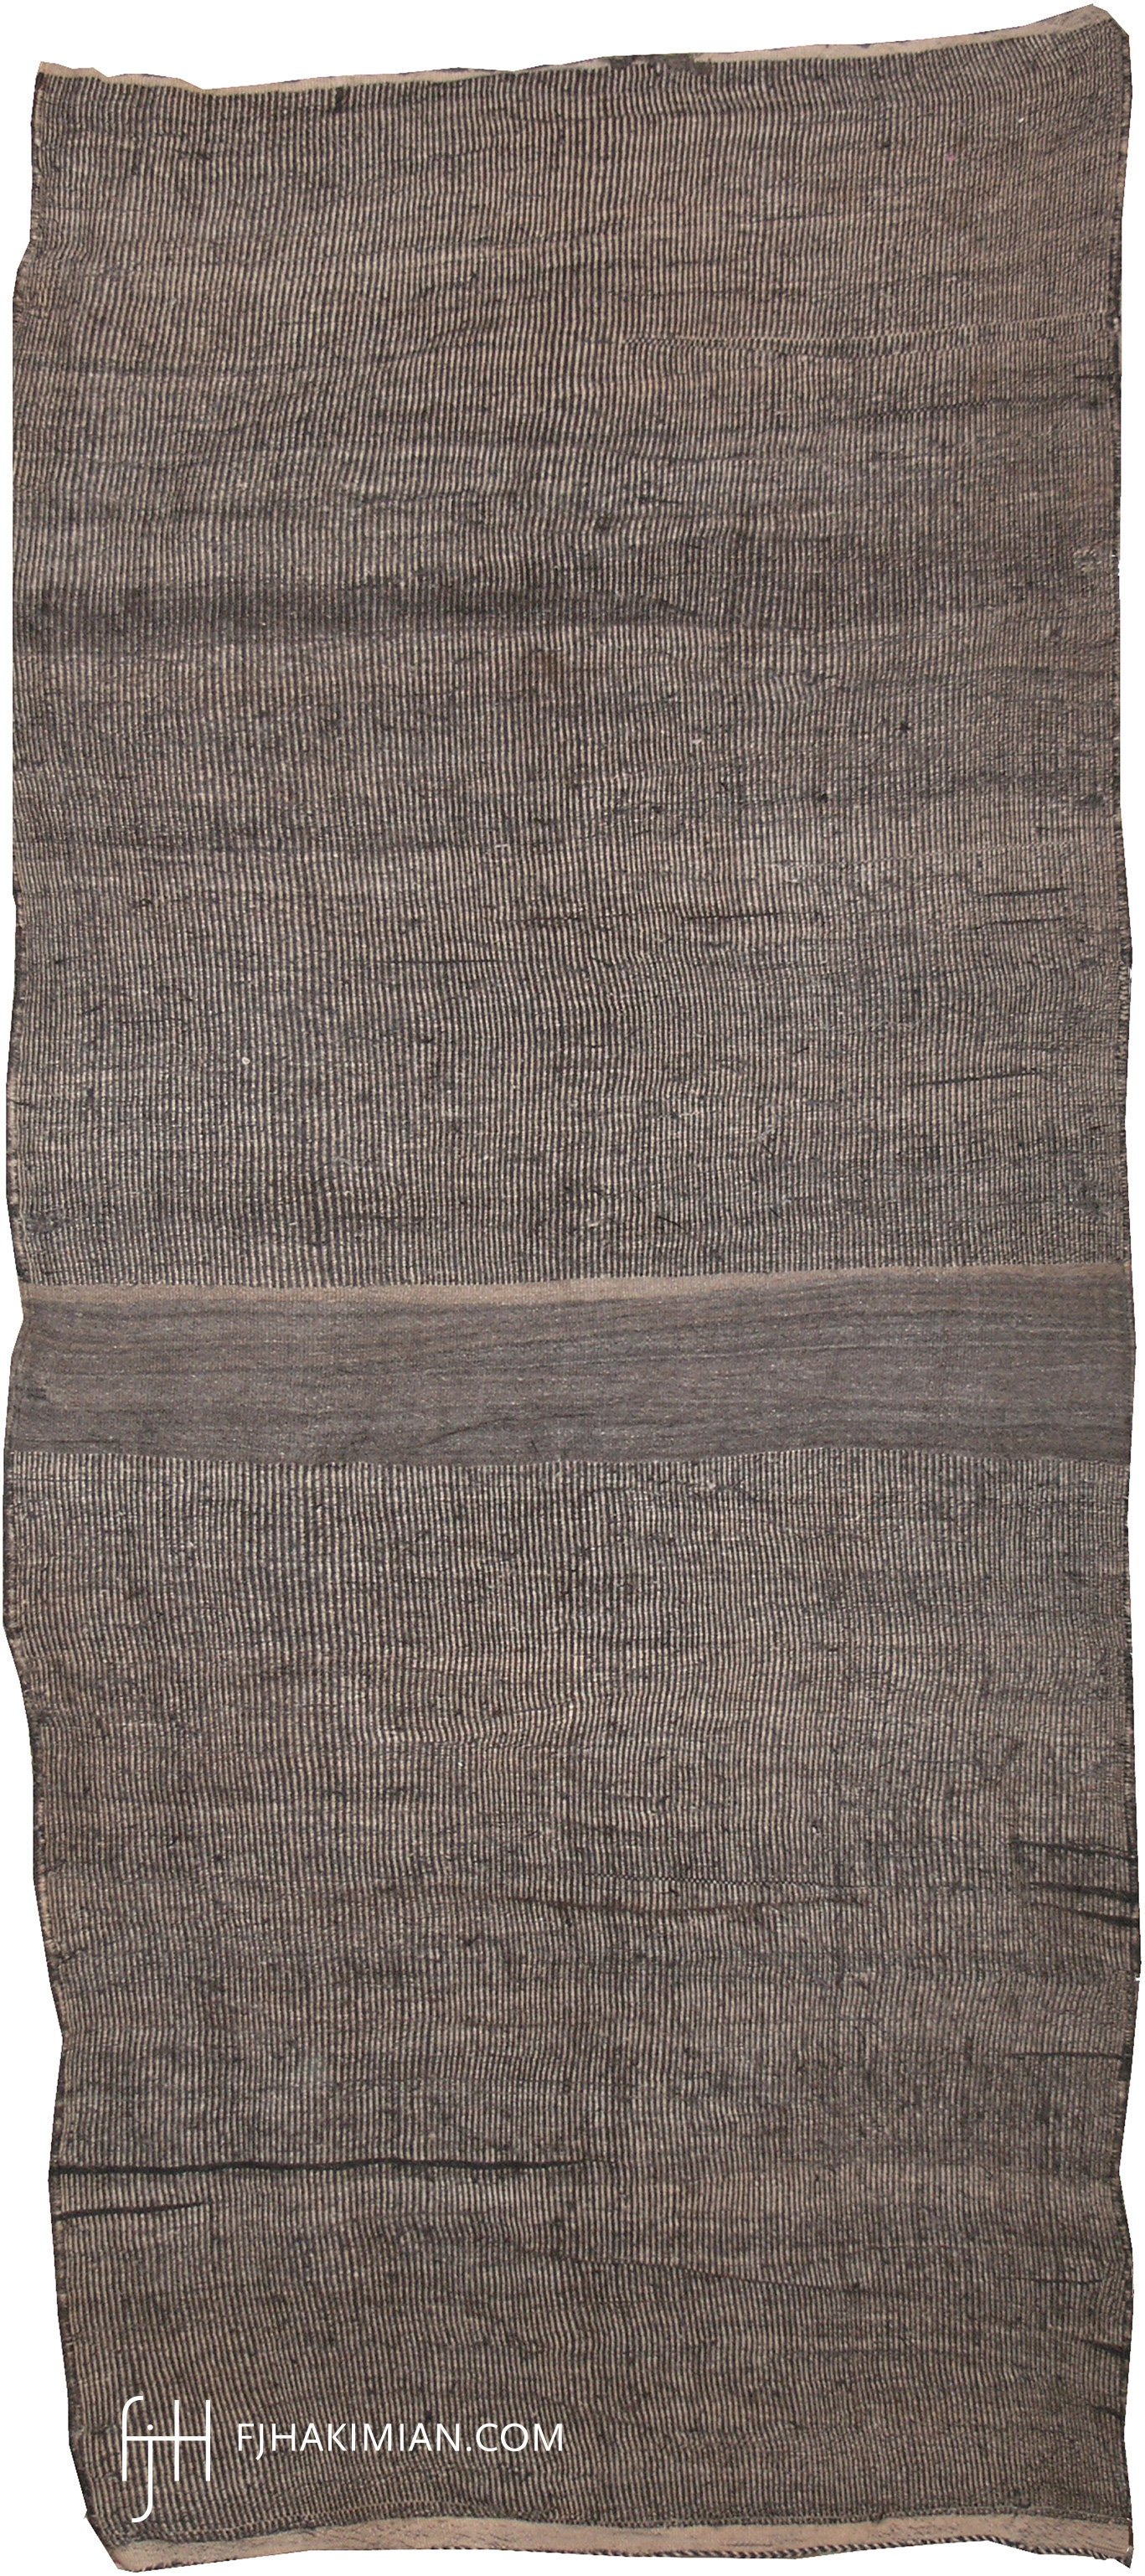 FJ Hakimian | 15008 | Vintage Moroccan Carpet